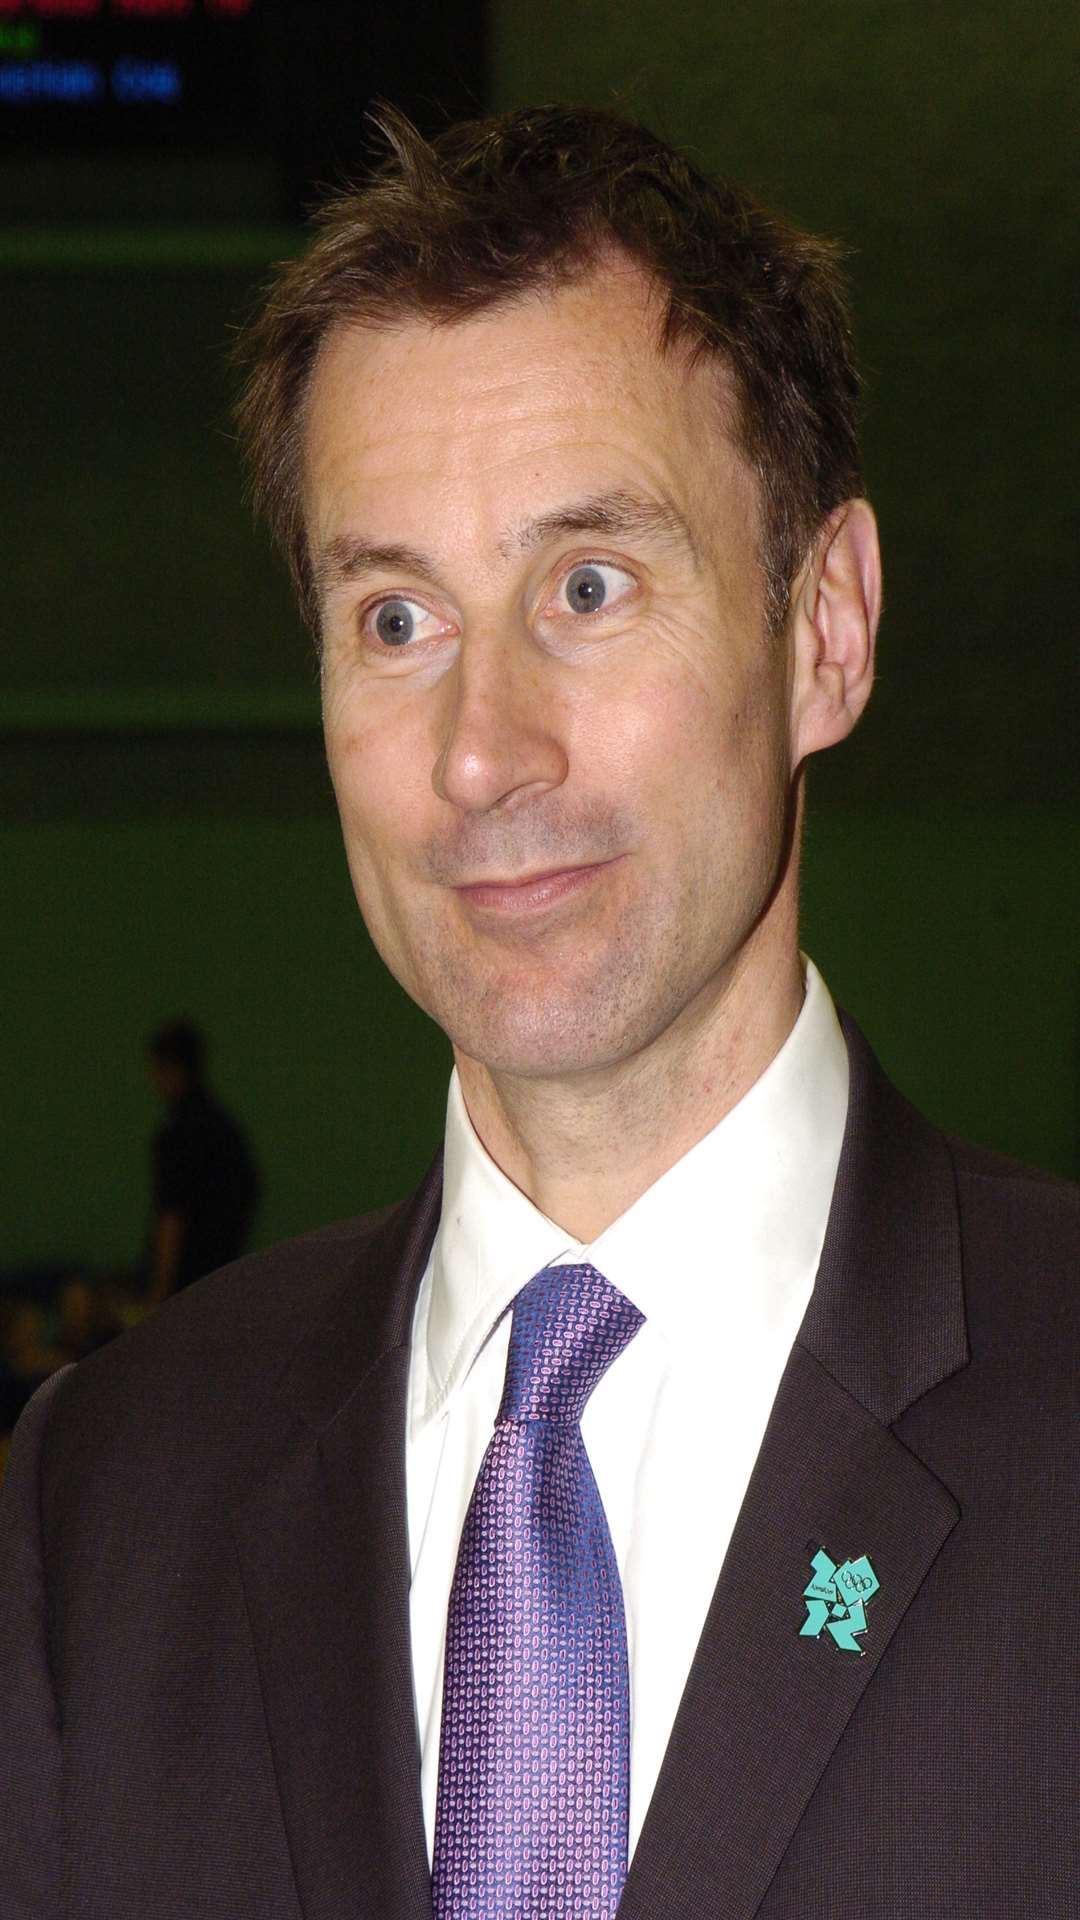 Health secretary Jeremy Hunt